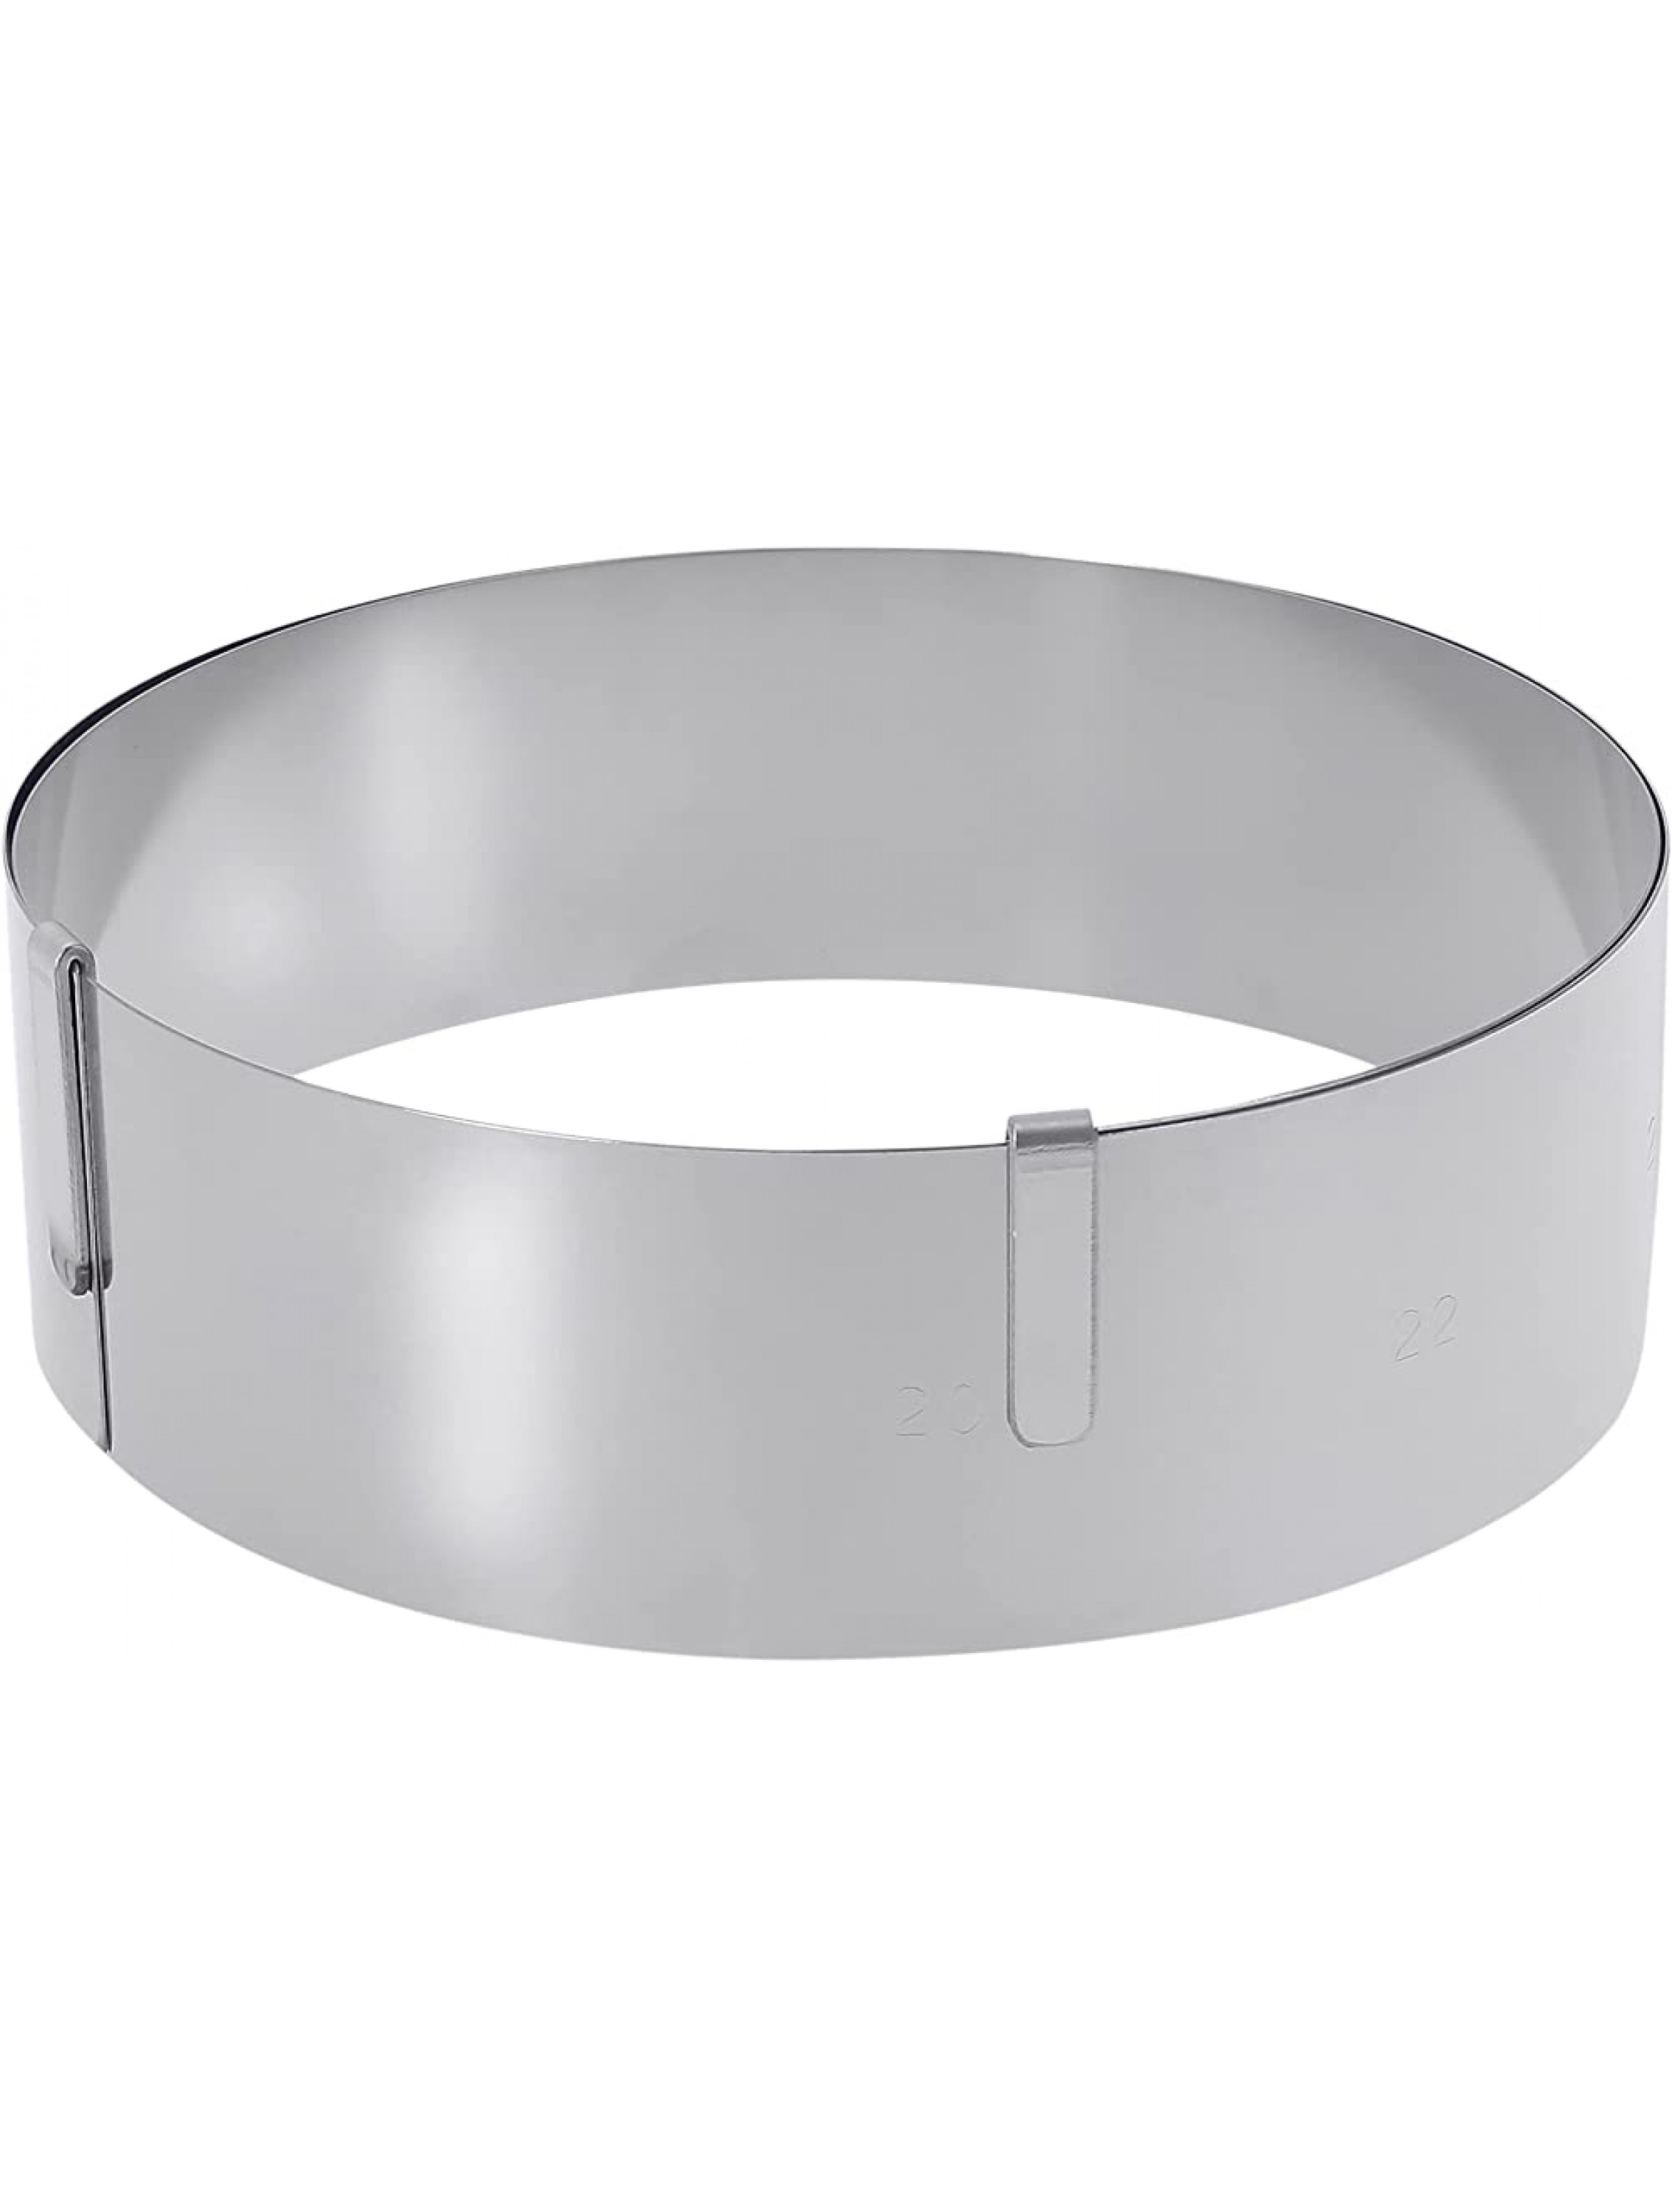 de Buyer Round Expandable Cake Frame Baking Supplies Stainless Steel Cake Ring Dishwasher Safe 7 x 14 1.75'' Frame - BIJA88LXR